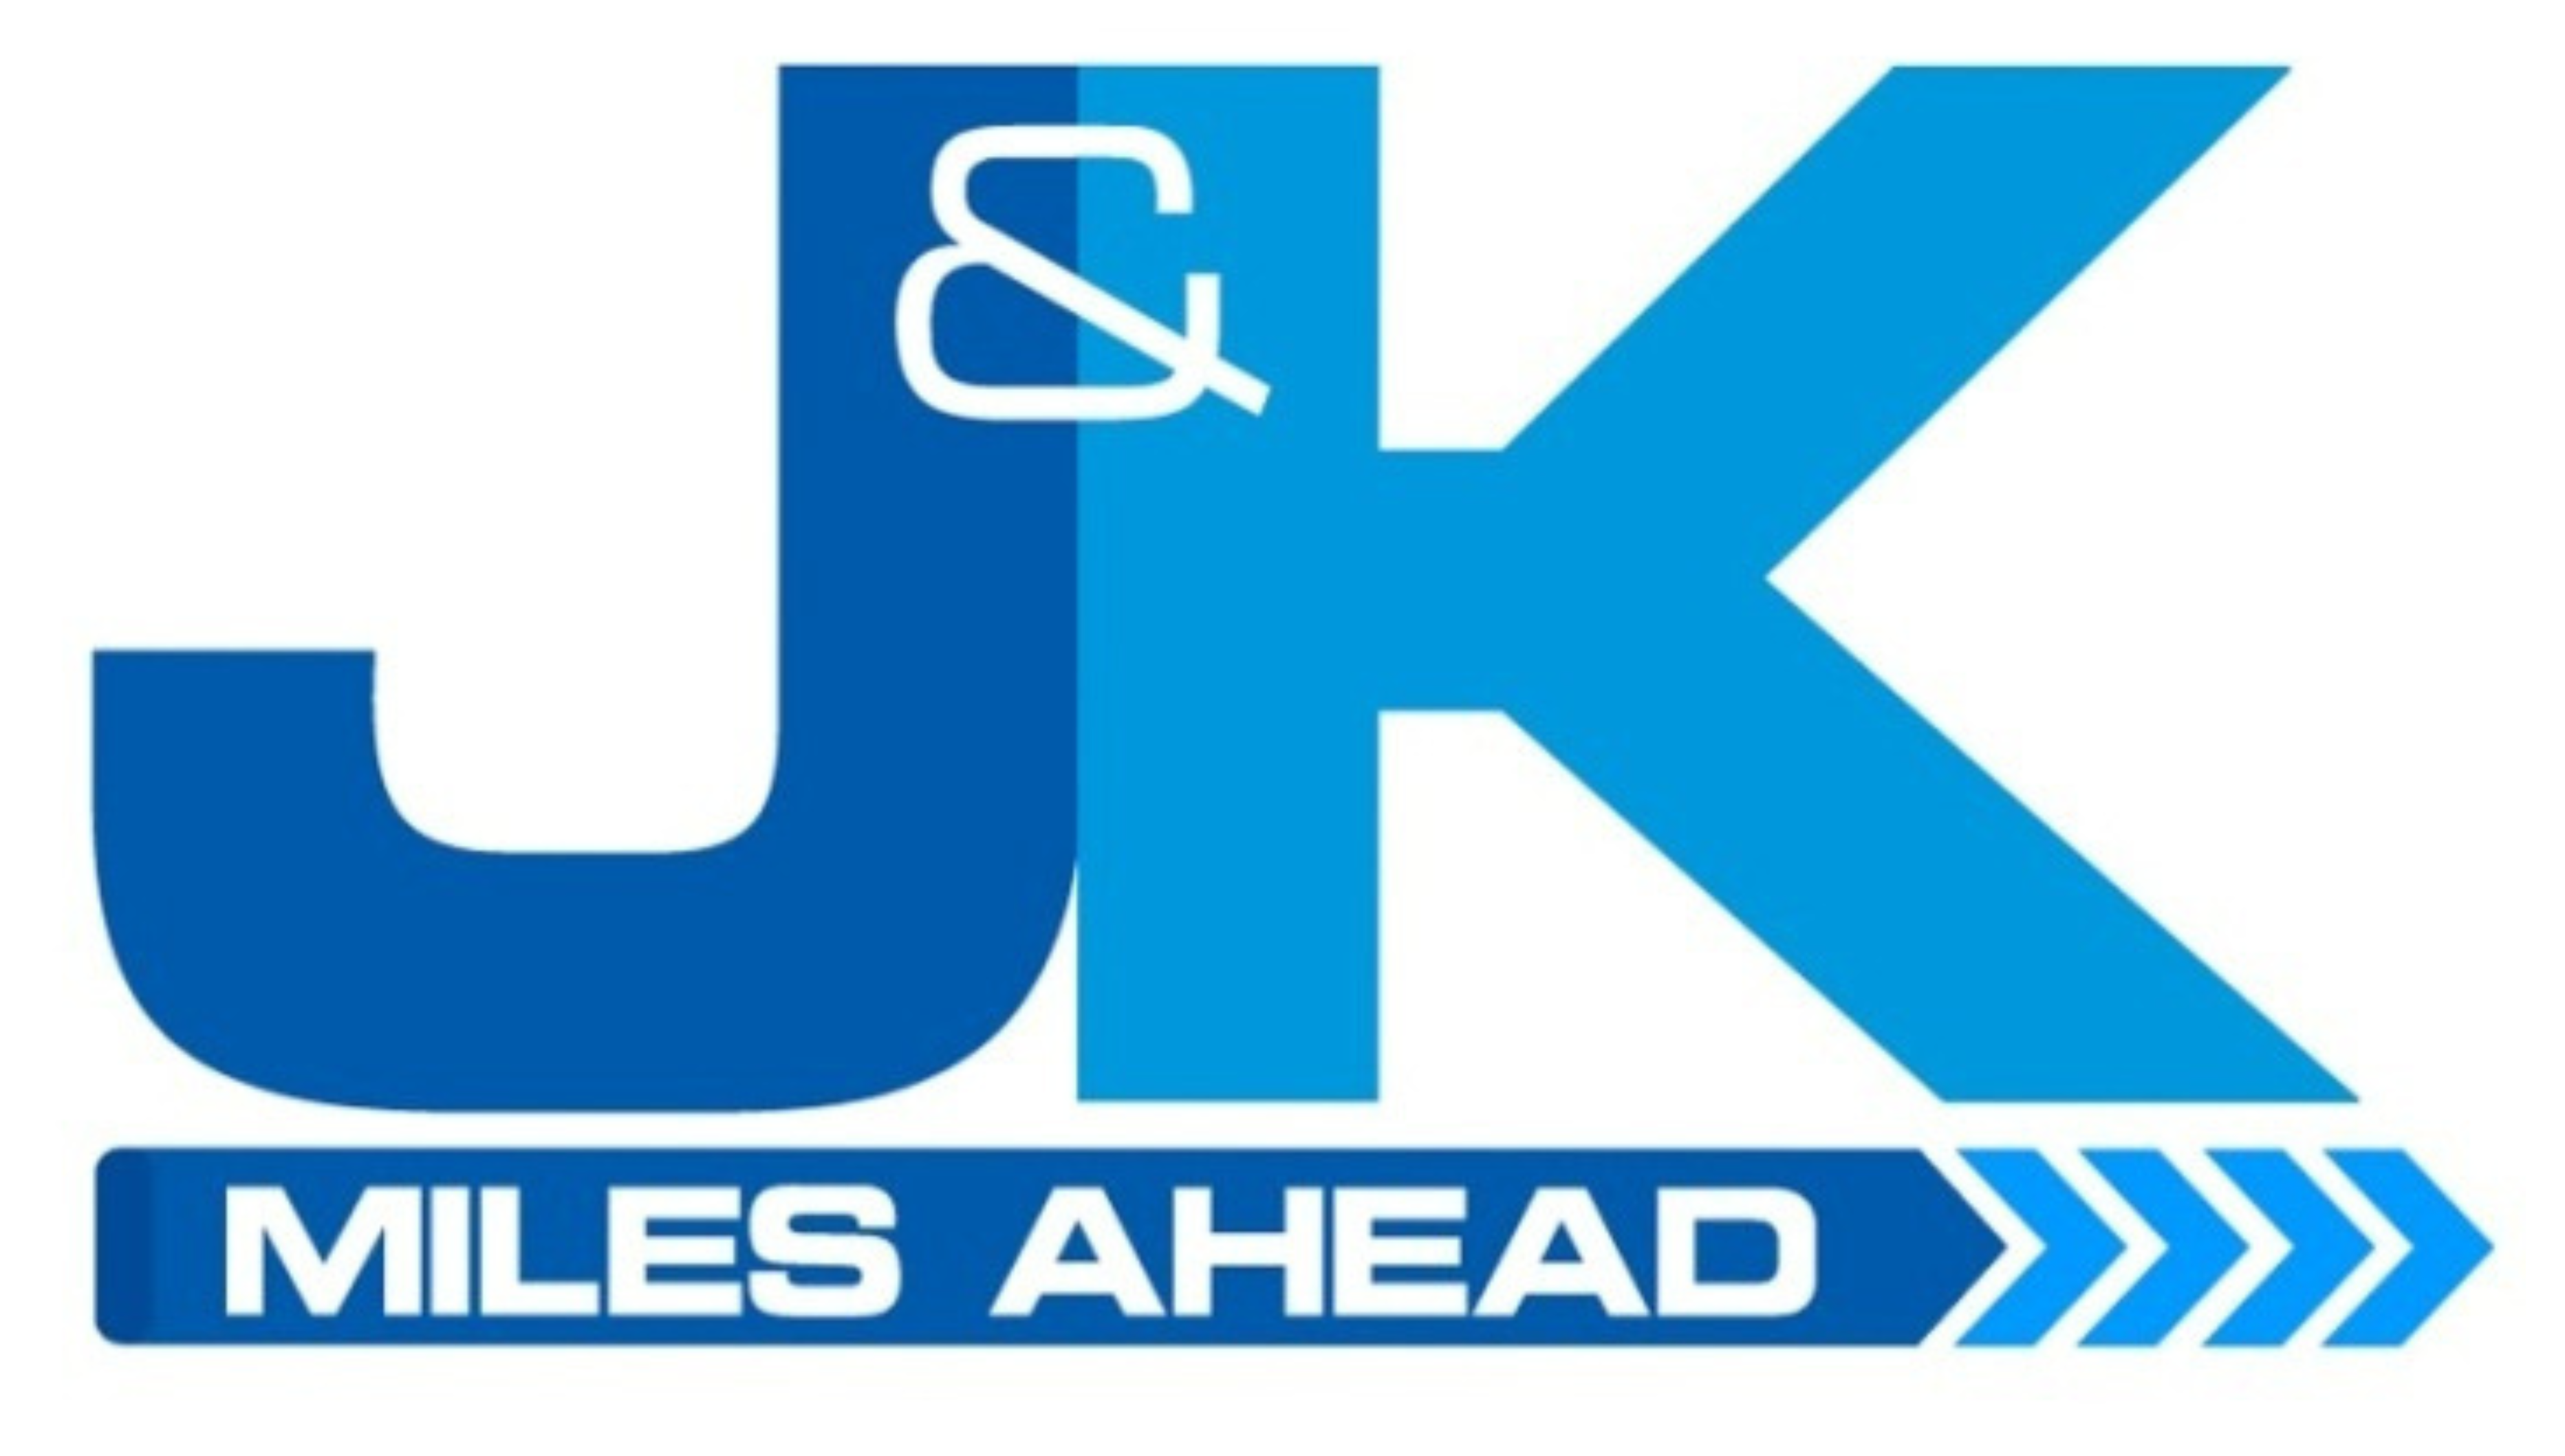 J&K Coaches Ltd | Tel: 028 8673 7776